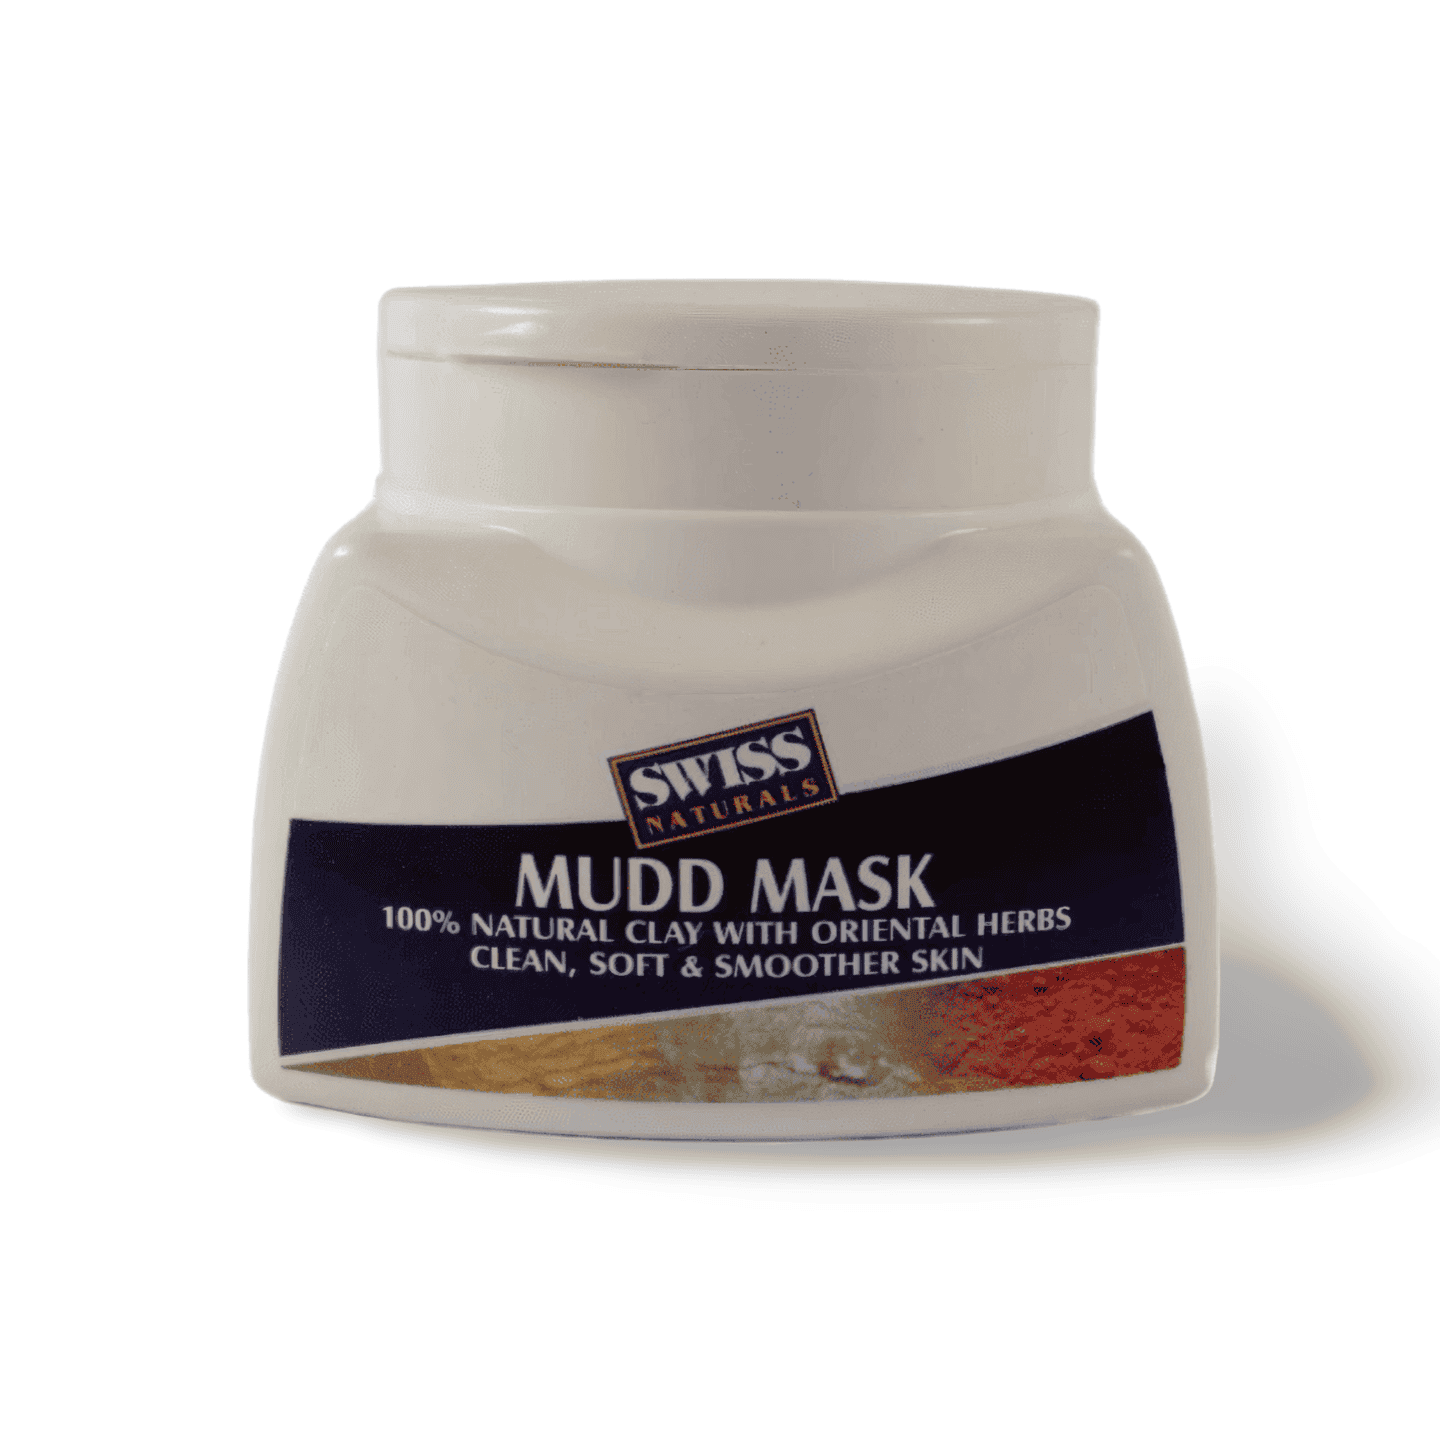 Swiss Natural Mud Mask